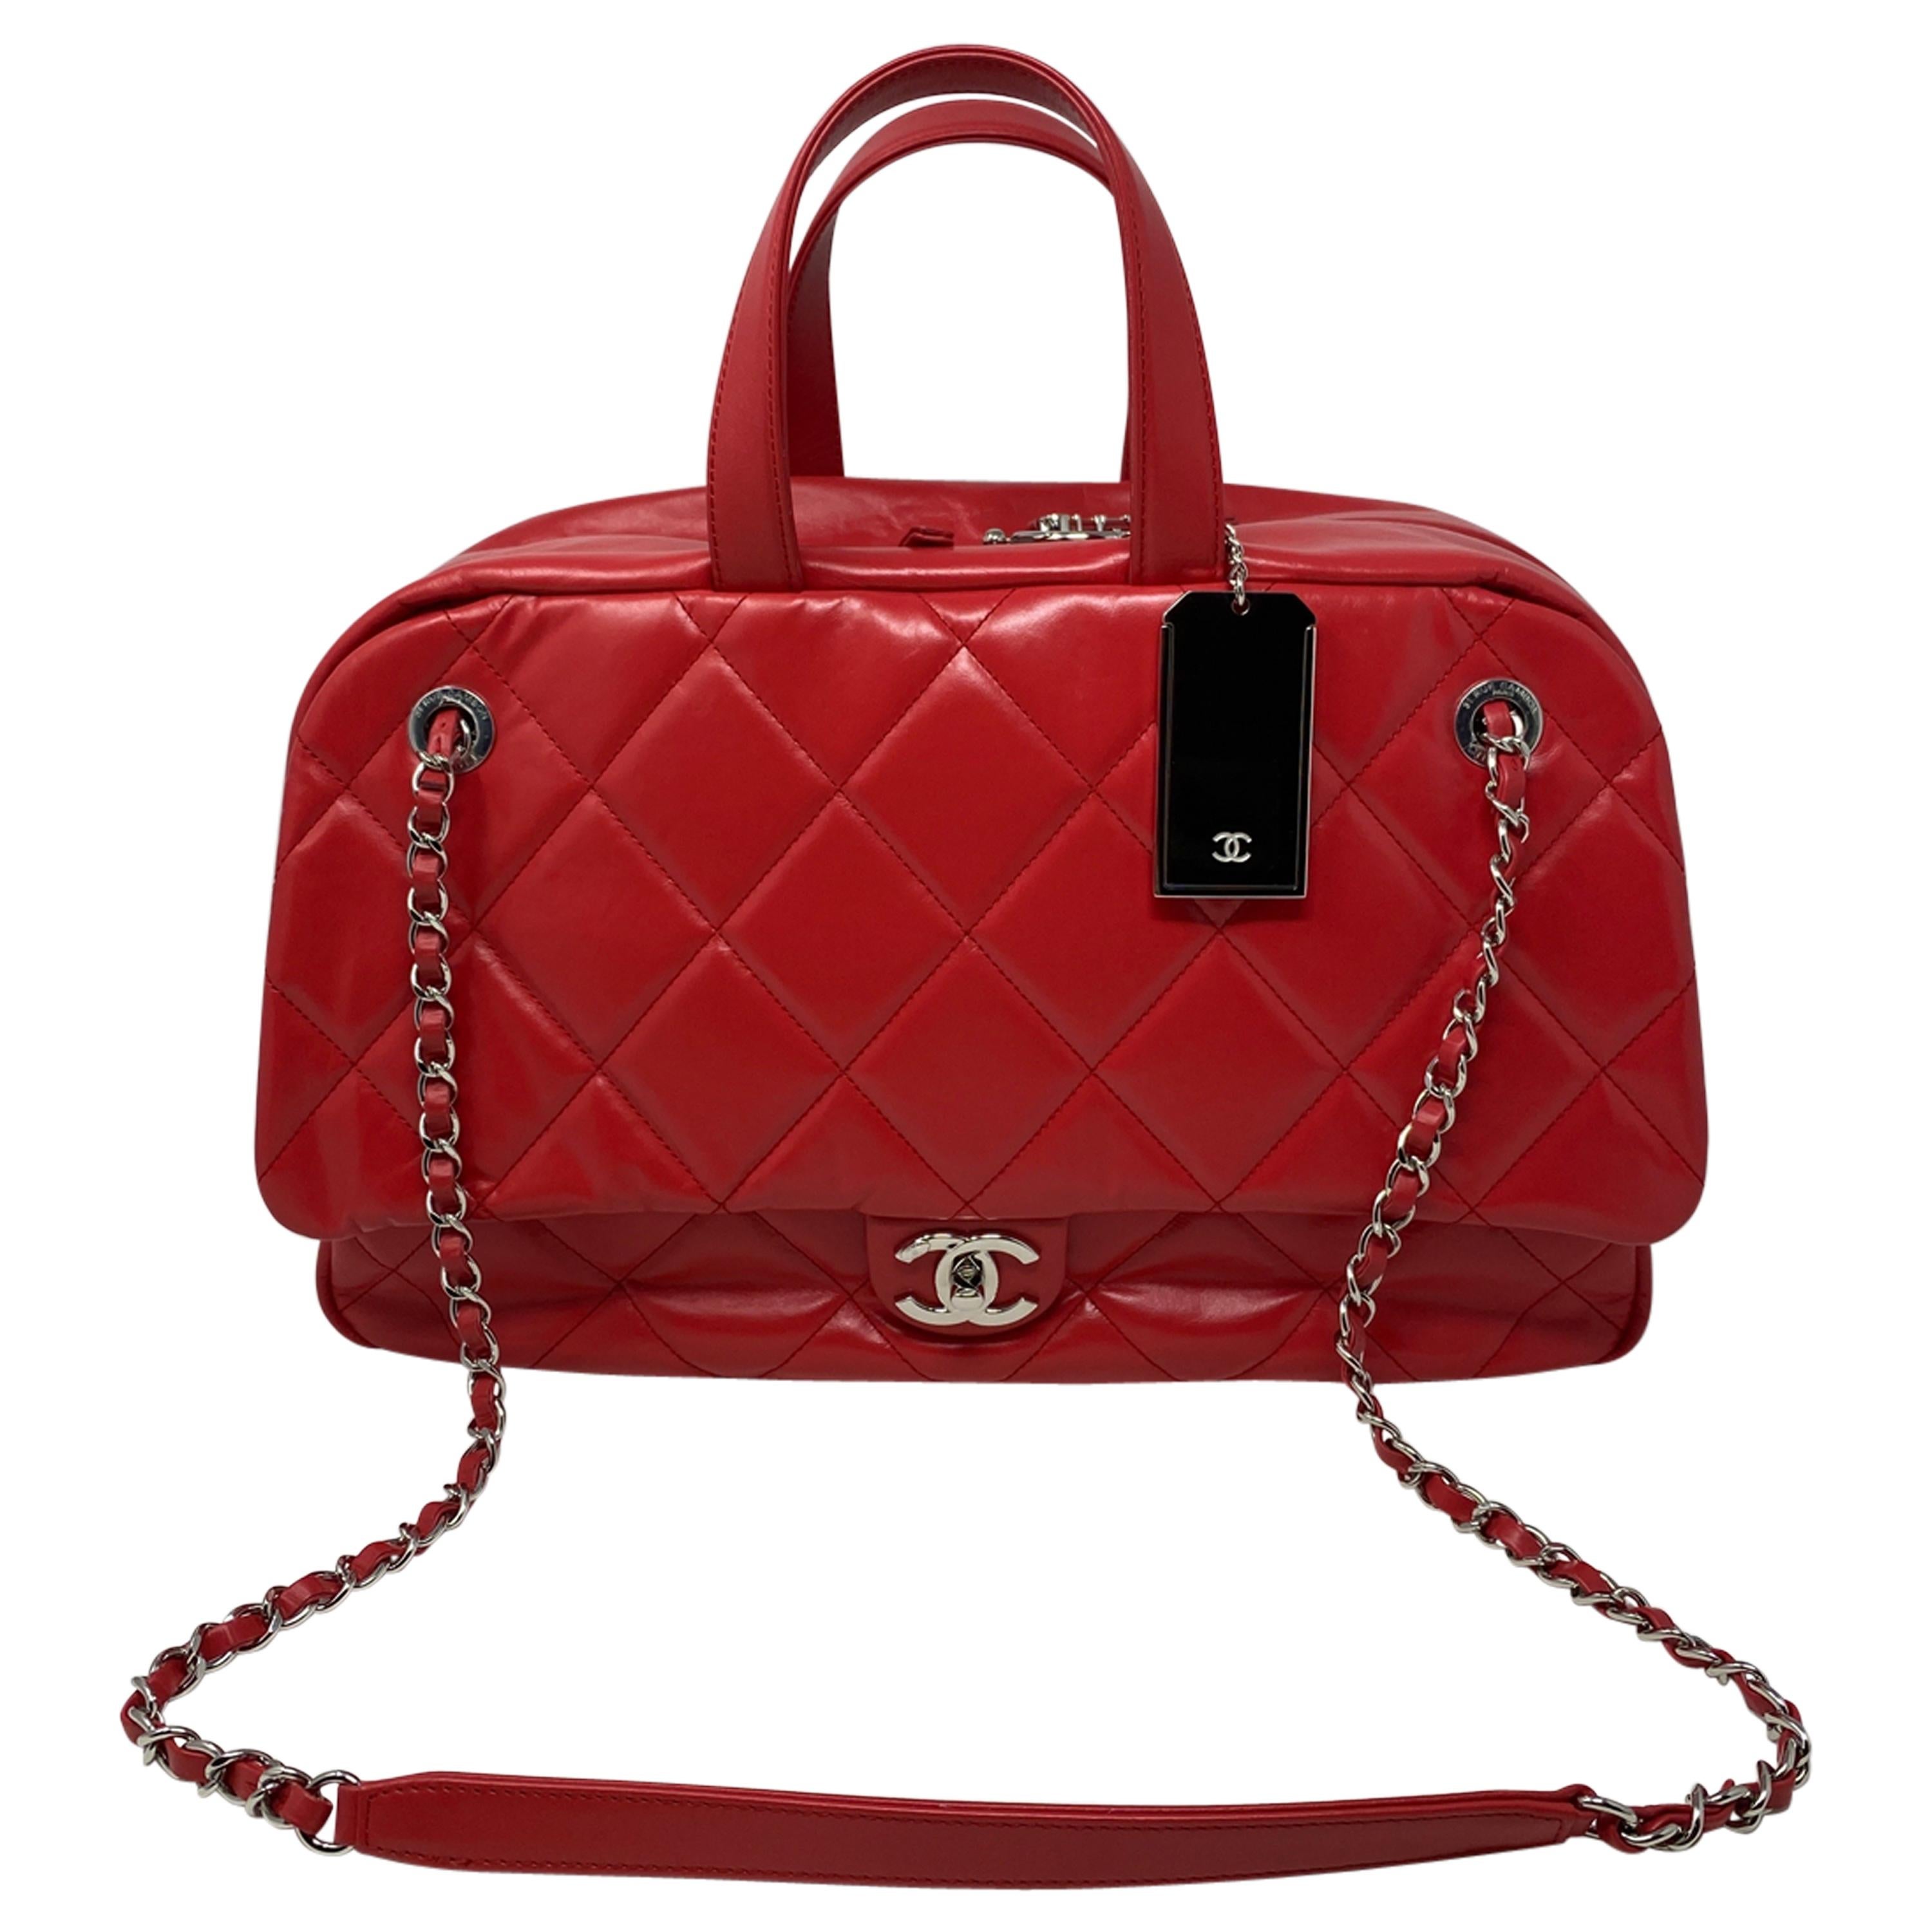 Chanel Large Red Bowler Bag 